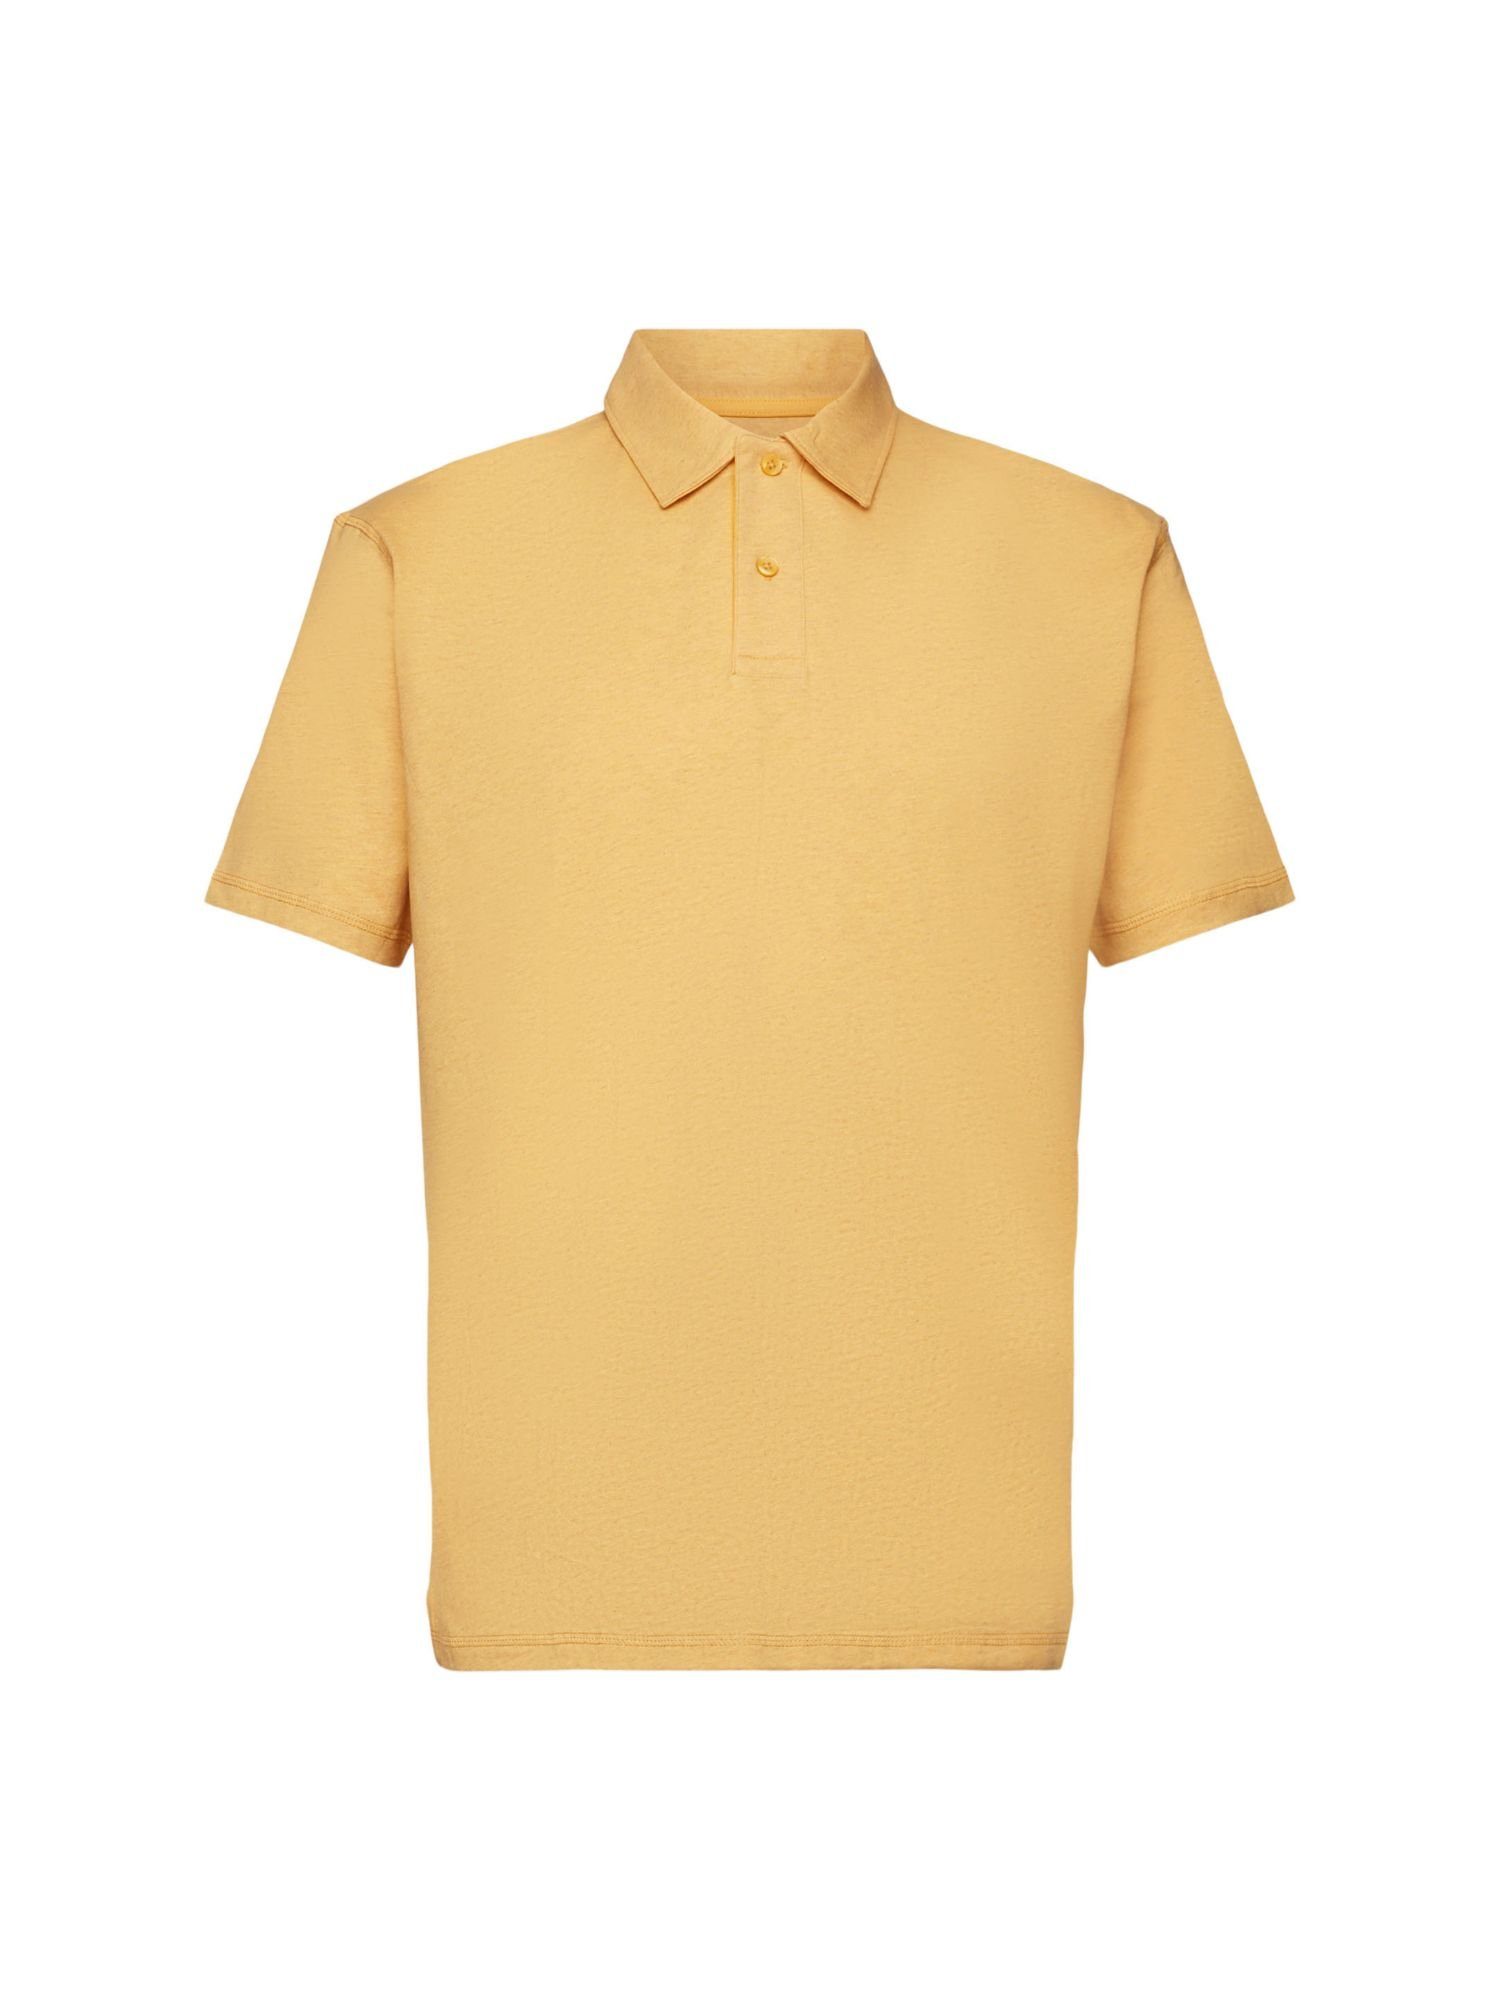 Esprit Poloshirt Hemd mit Baumwolljersey SUNFLOWER Polokragen YELLOW aus